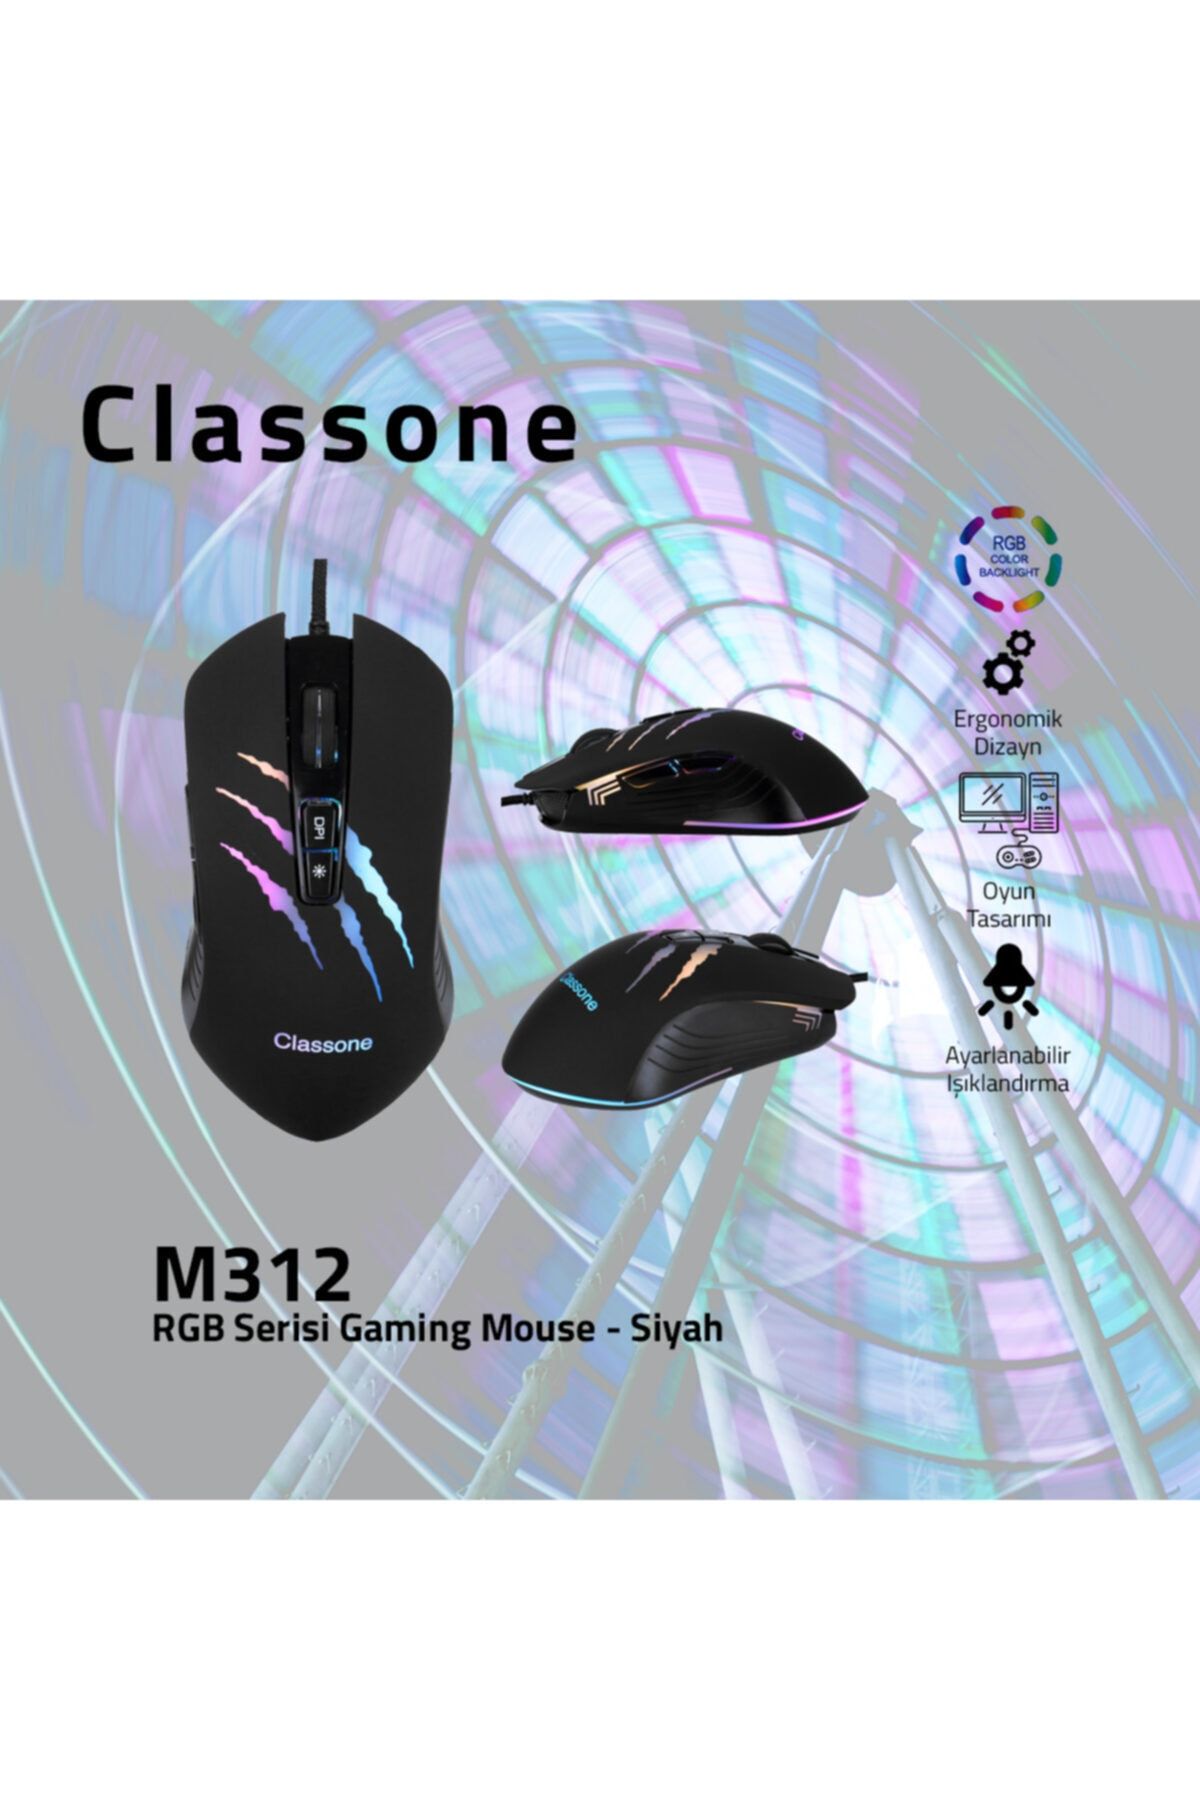 Classone M312 Rgb Serisi Gaming Mouse